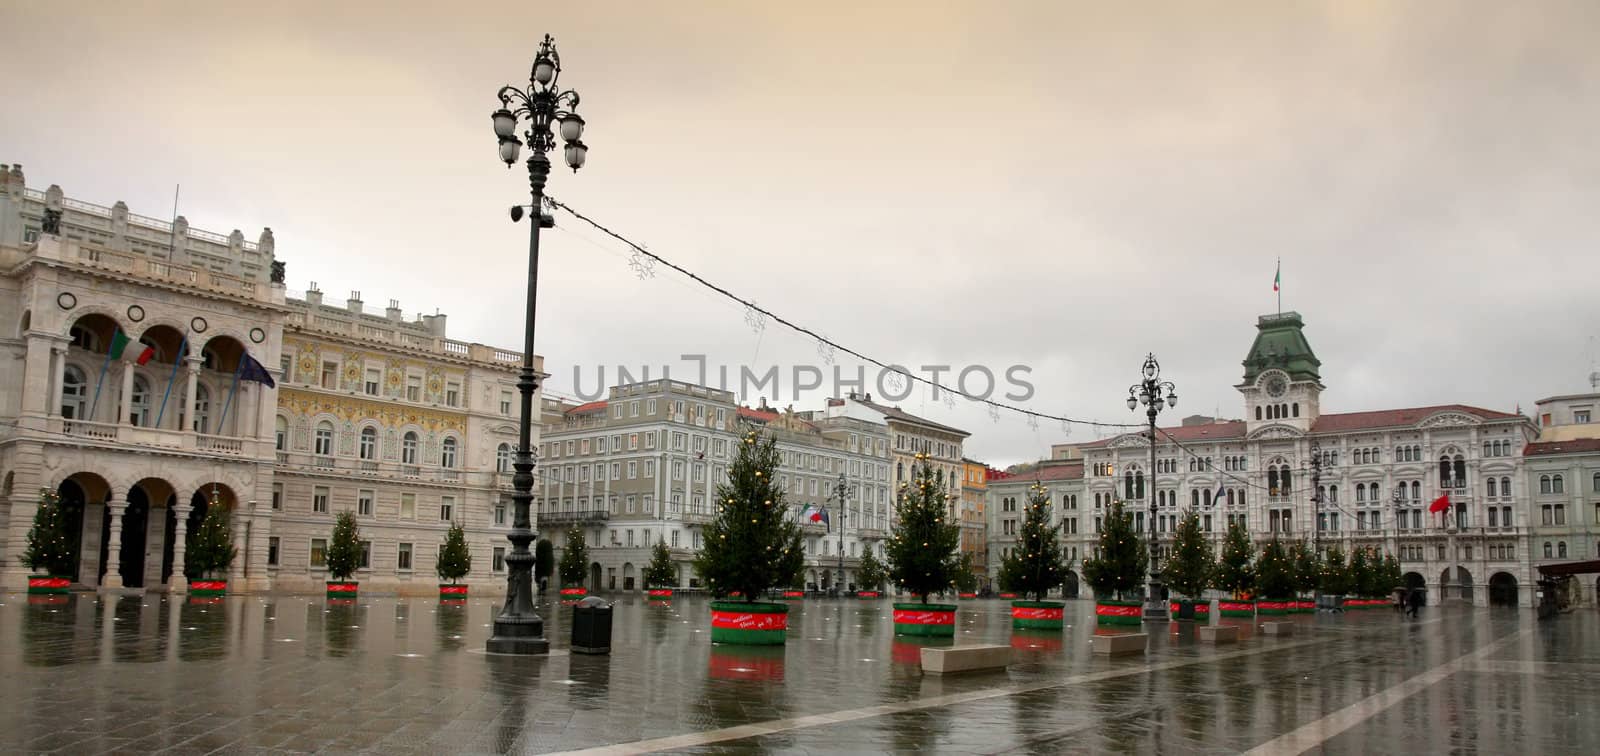 details Piazza Unita, Trieste, Italia, rainy weather